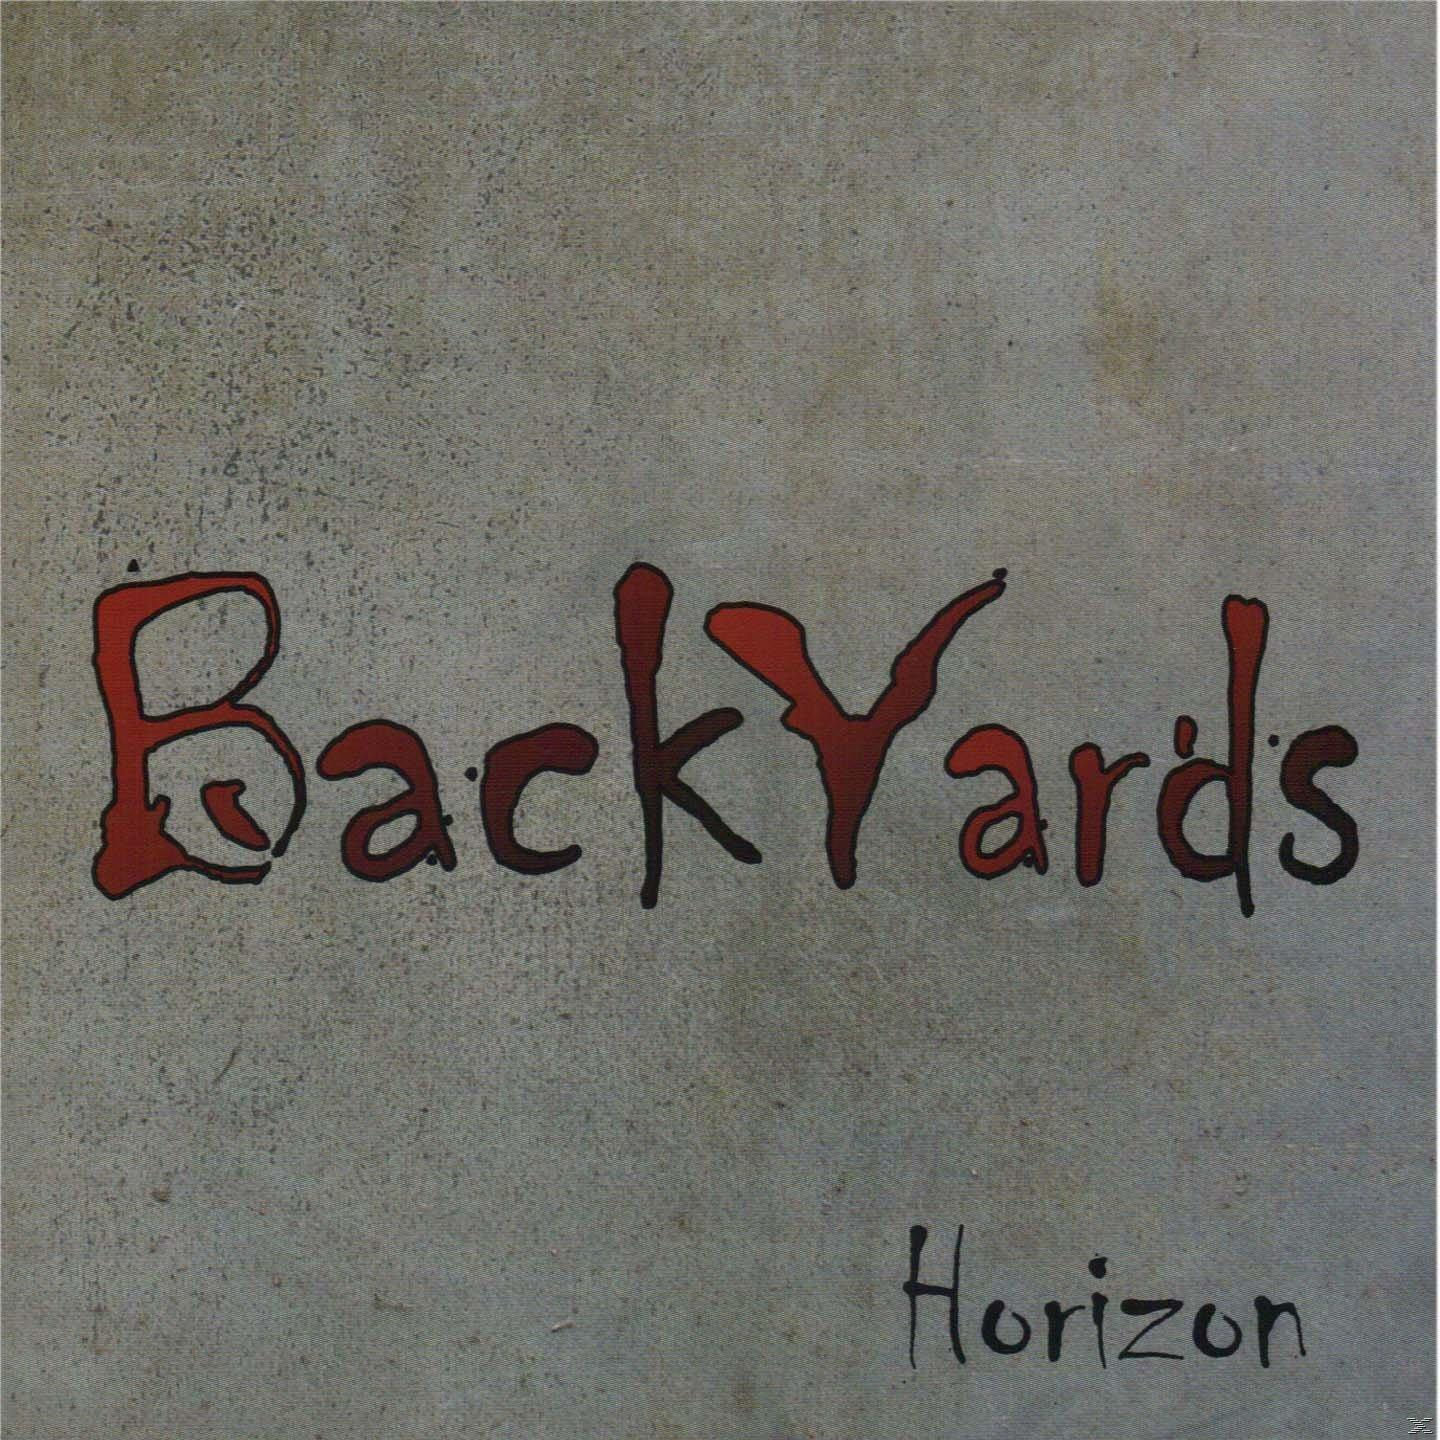 Backyards - Horizon - (CD)